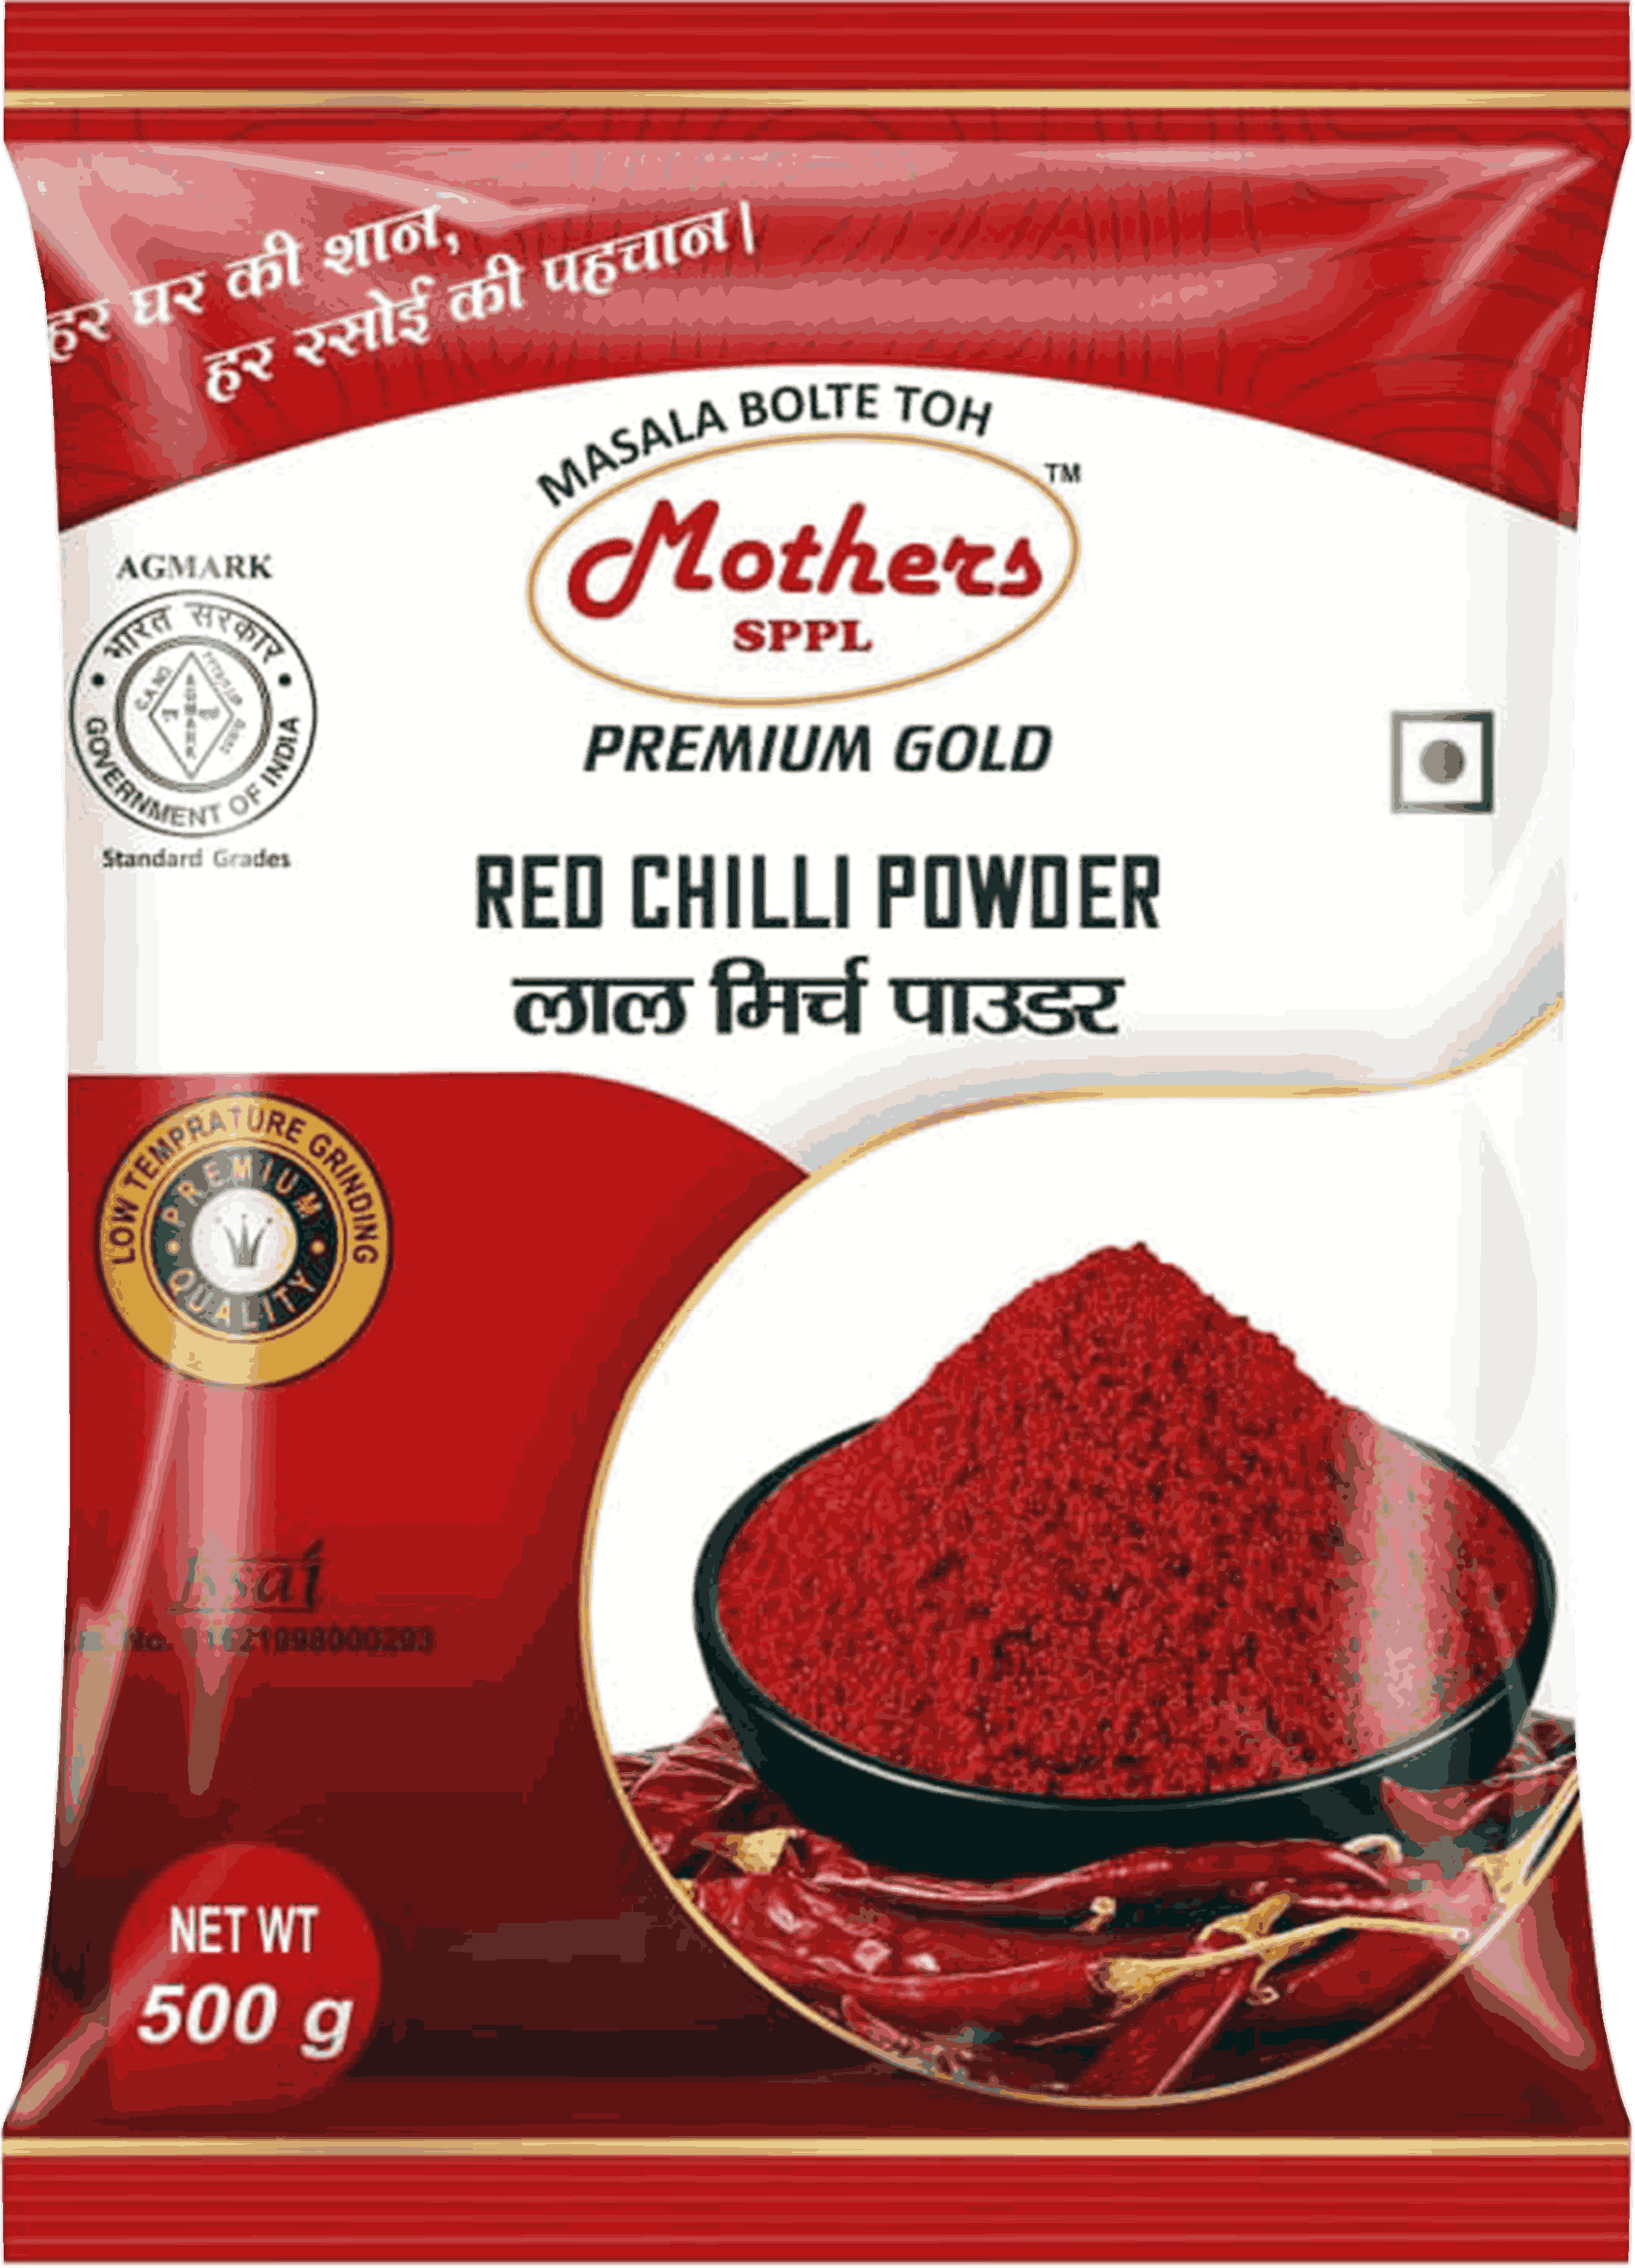 Premium gold red chilli powder